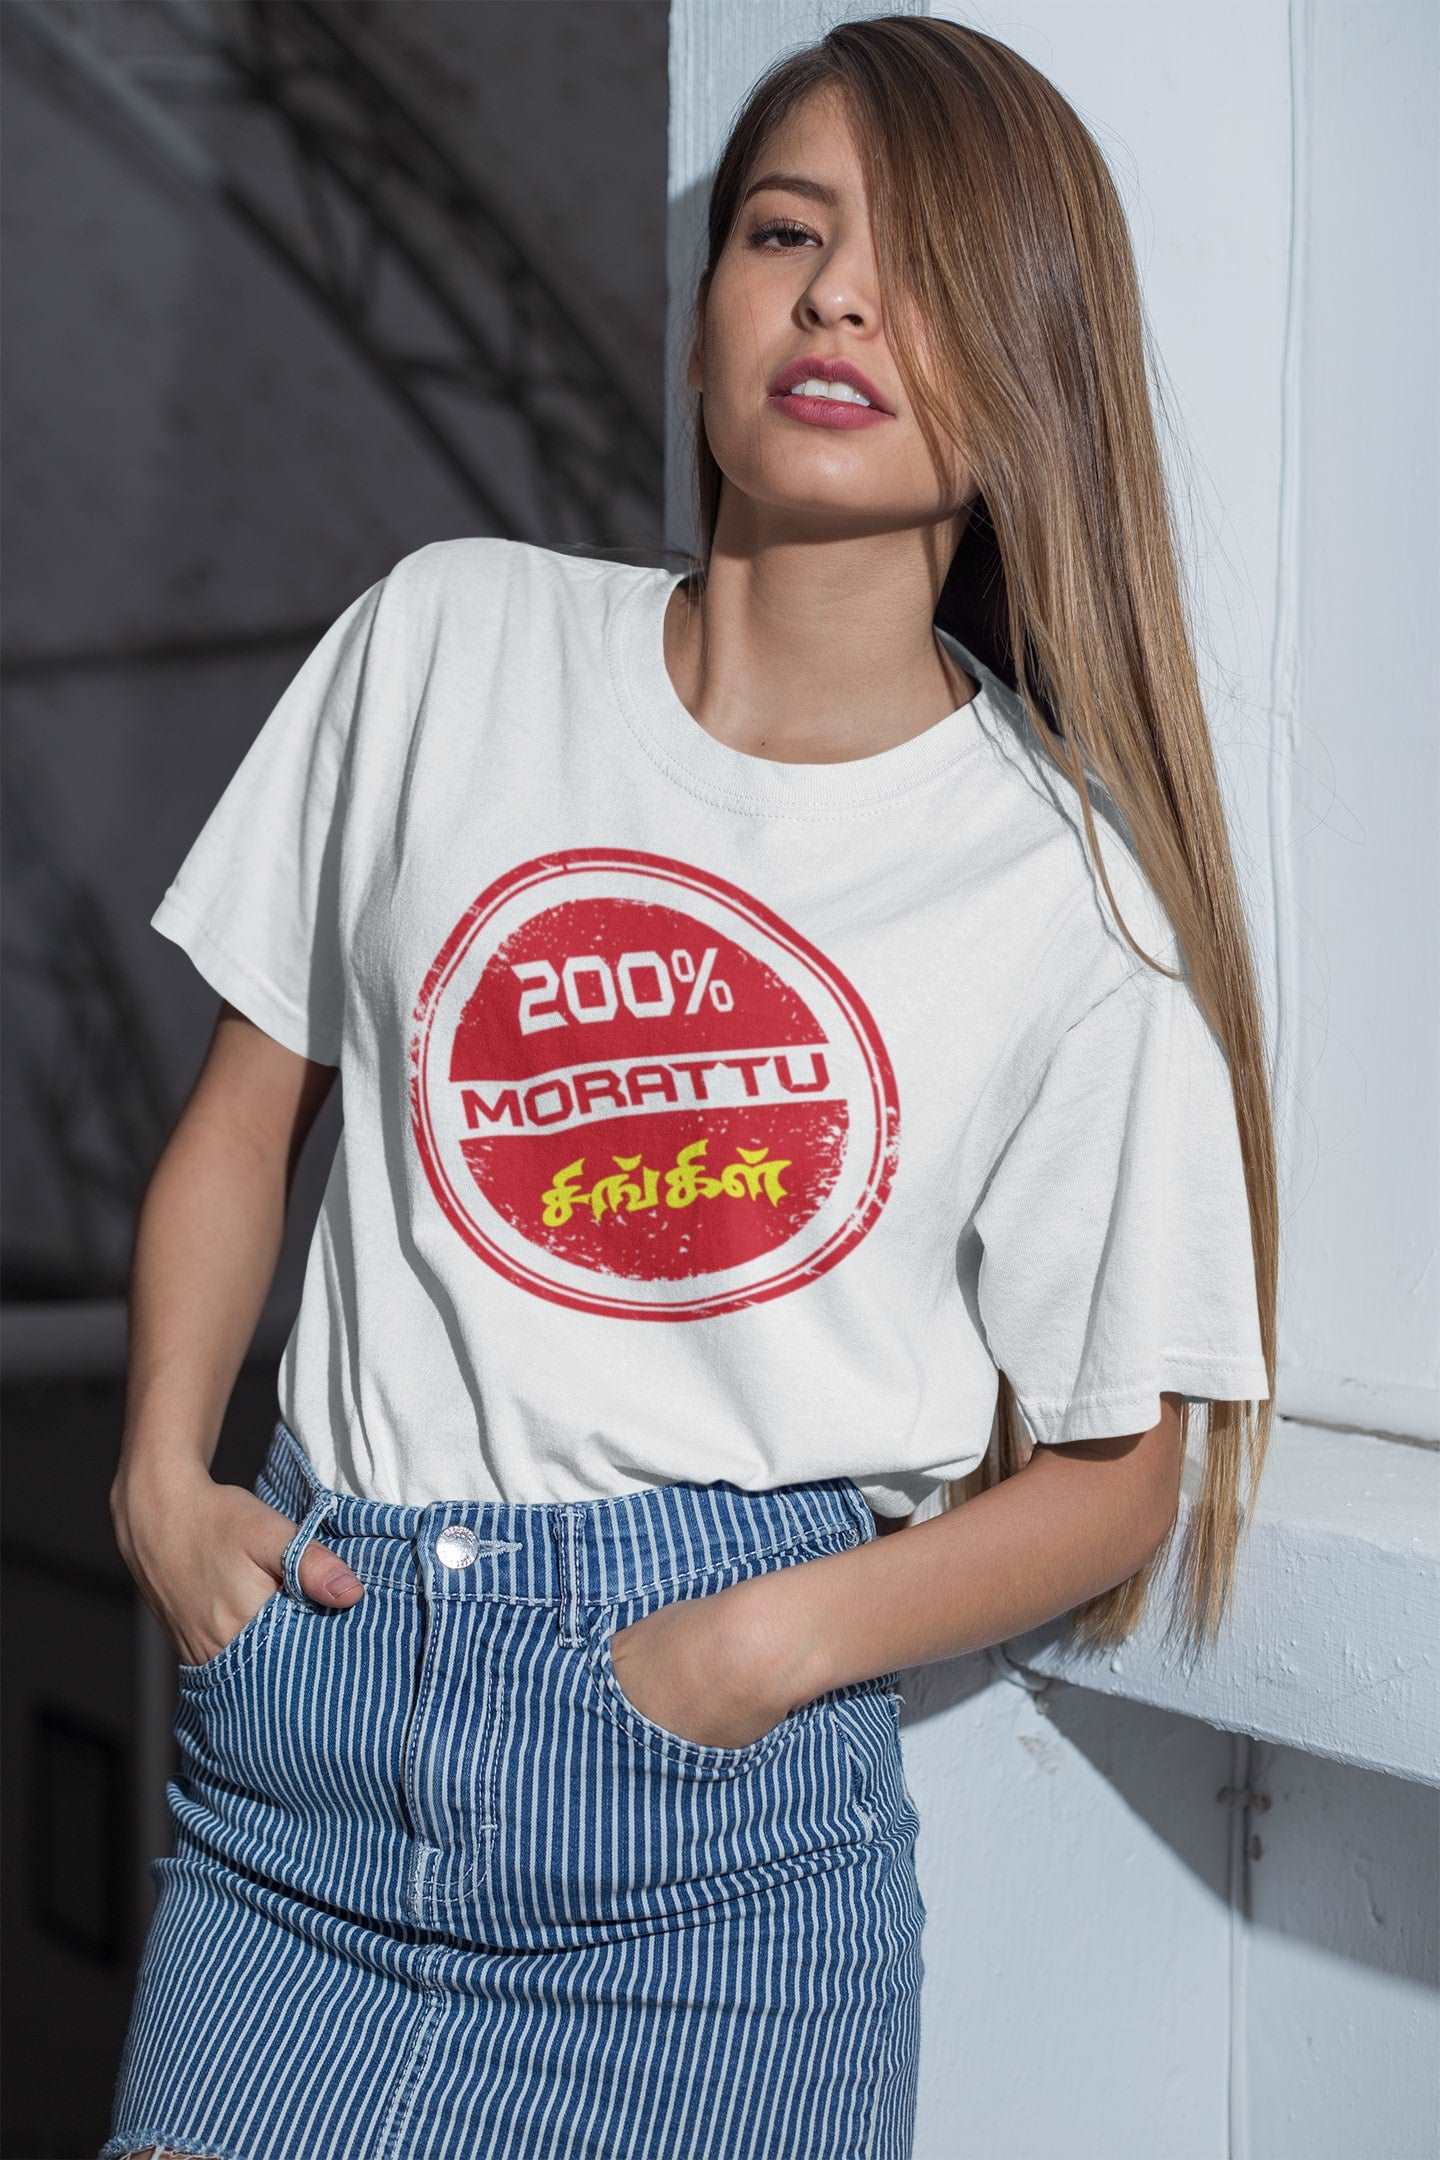 Buy Morattu Single T-Shirt Online